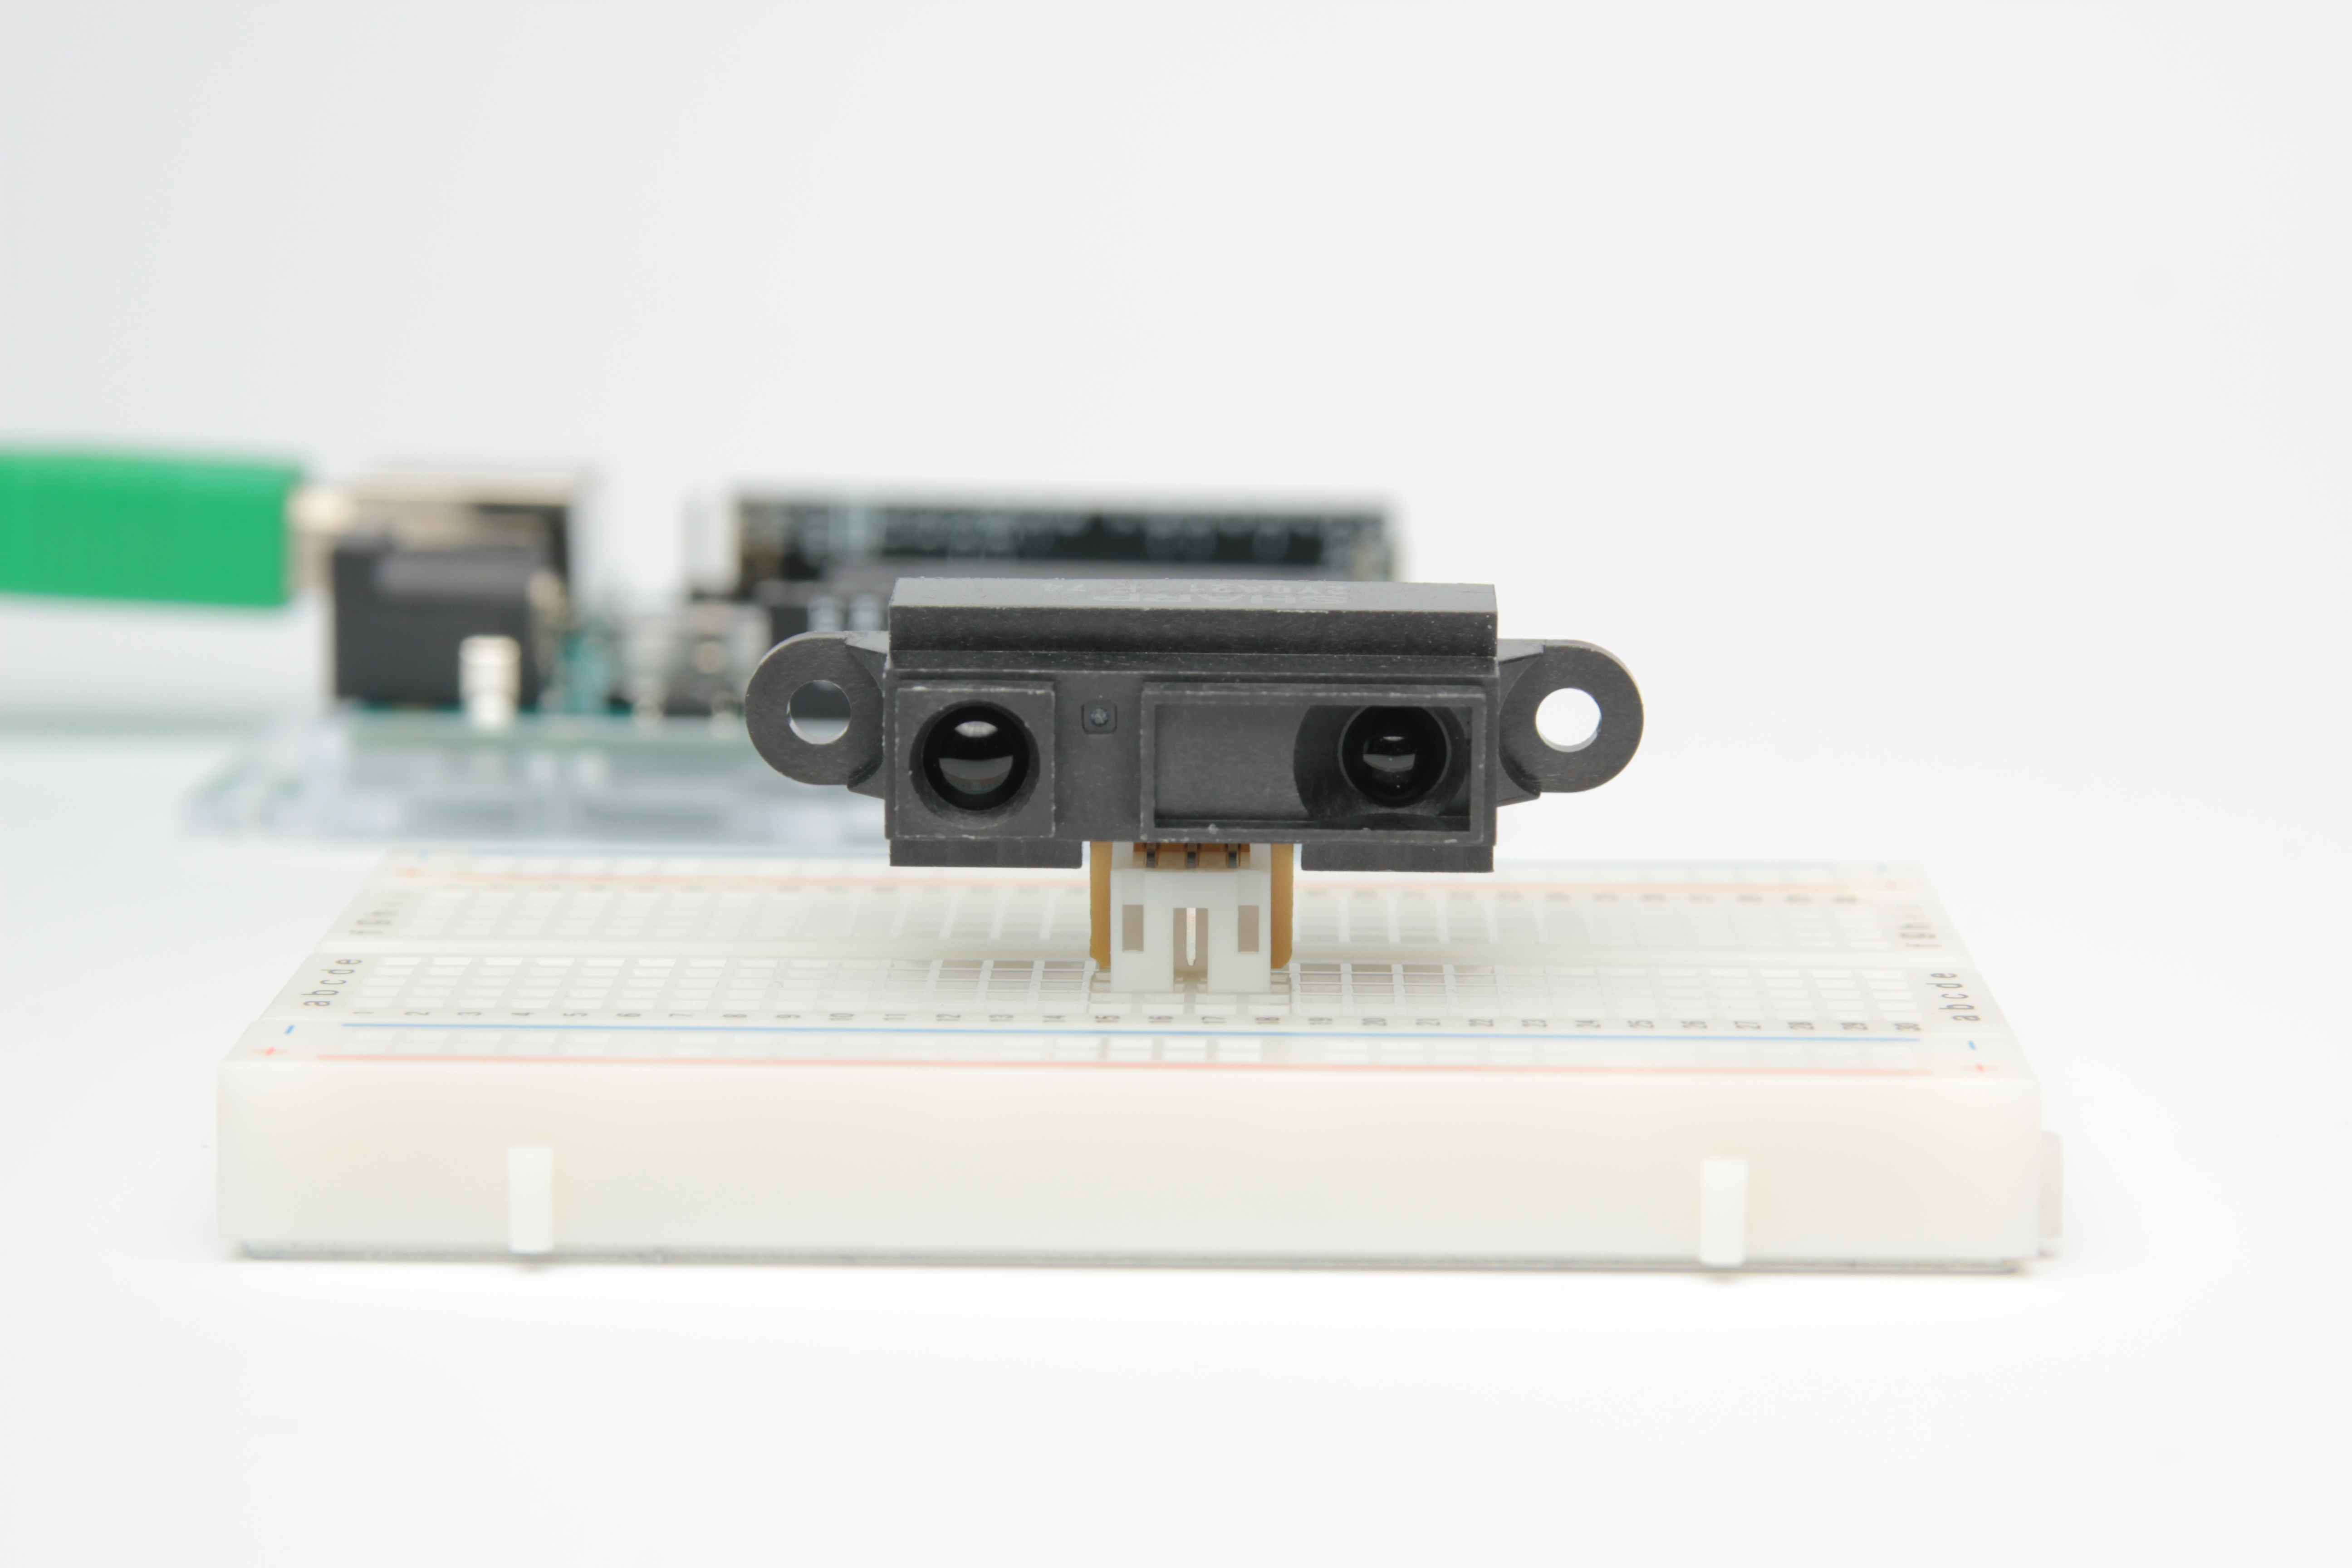 How to use a SHARP GP2Y0A21YK0F IR Distance Sensor with Arduino